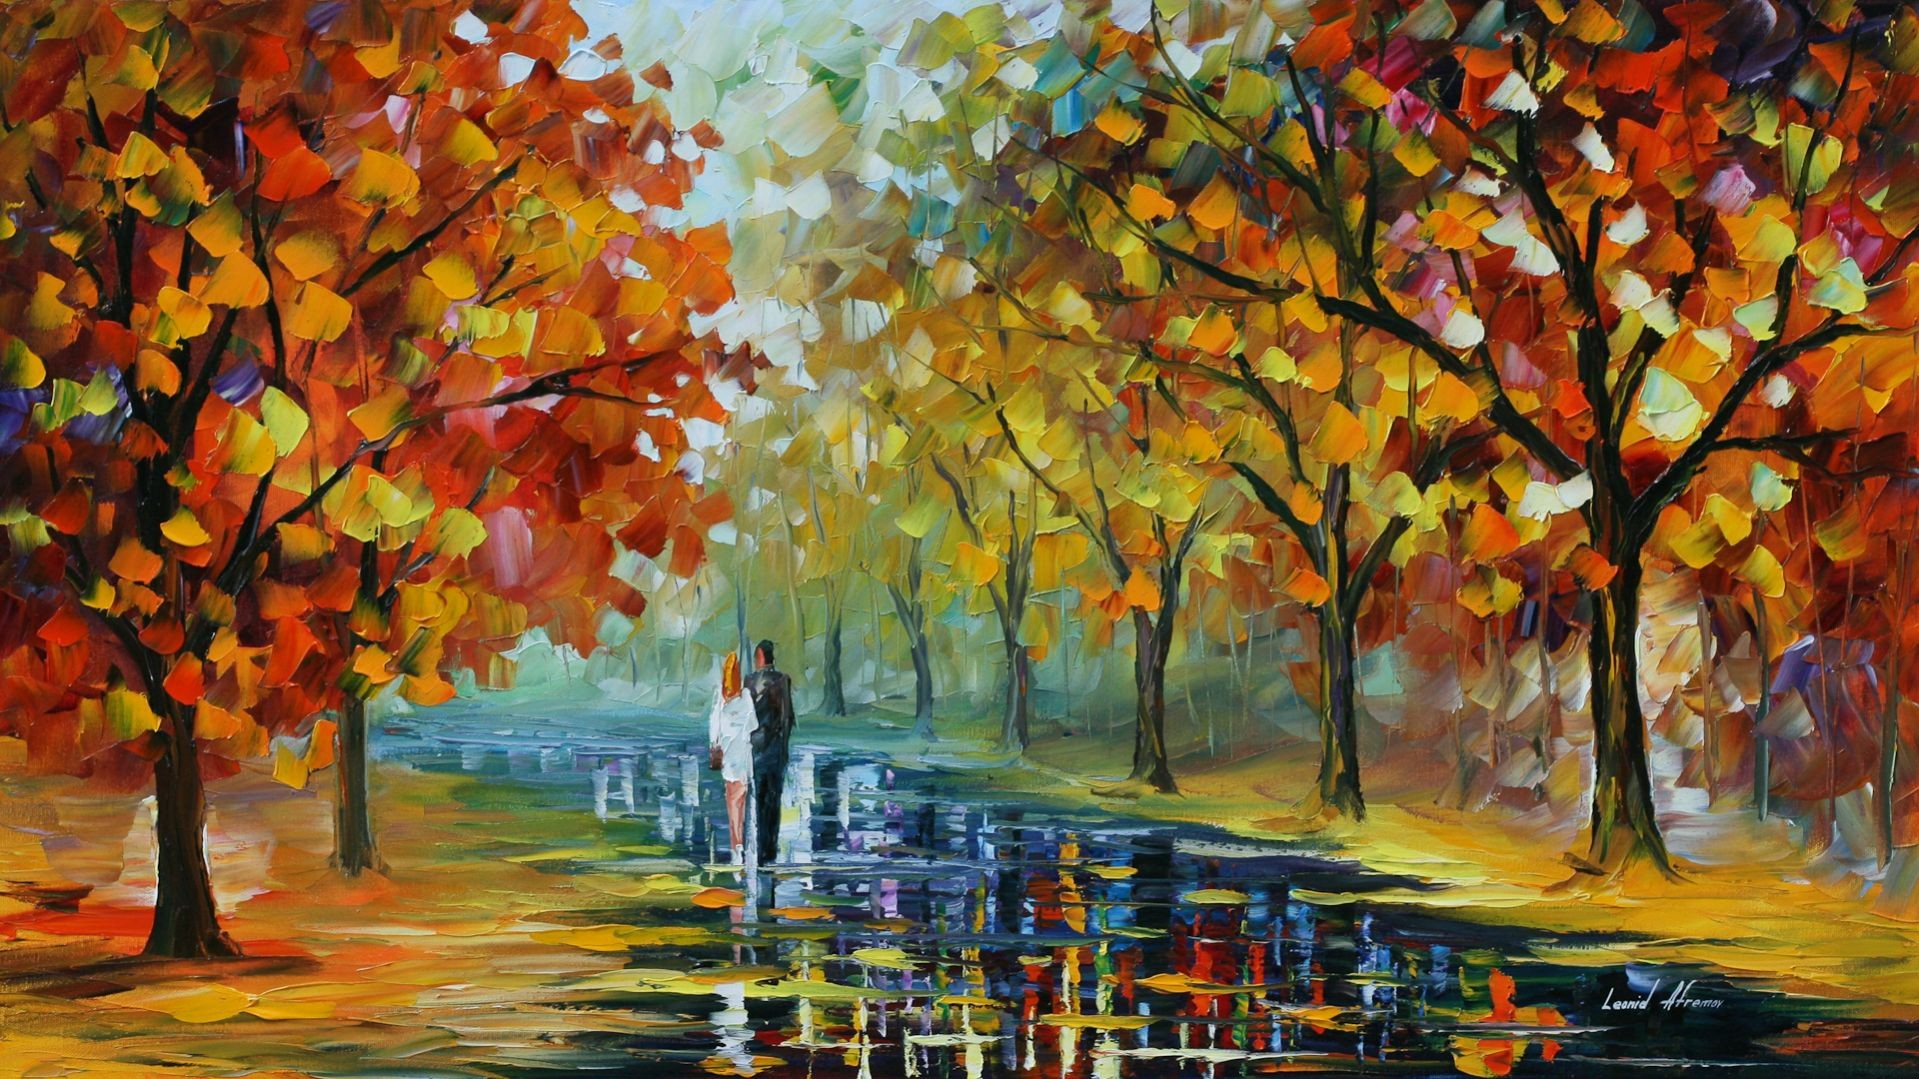 General 1919x1079 Leonid Afremov fall couple park trees path painting artwork reflection digital art